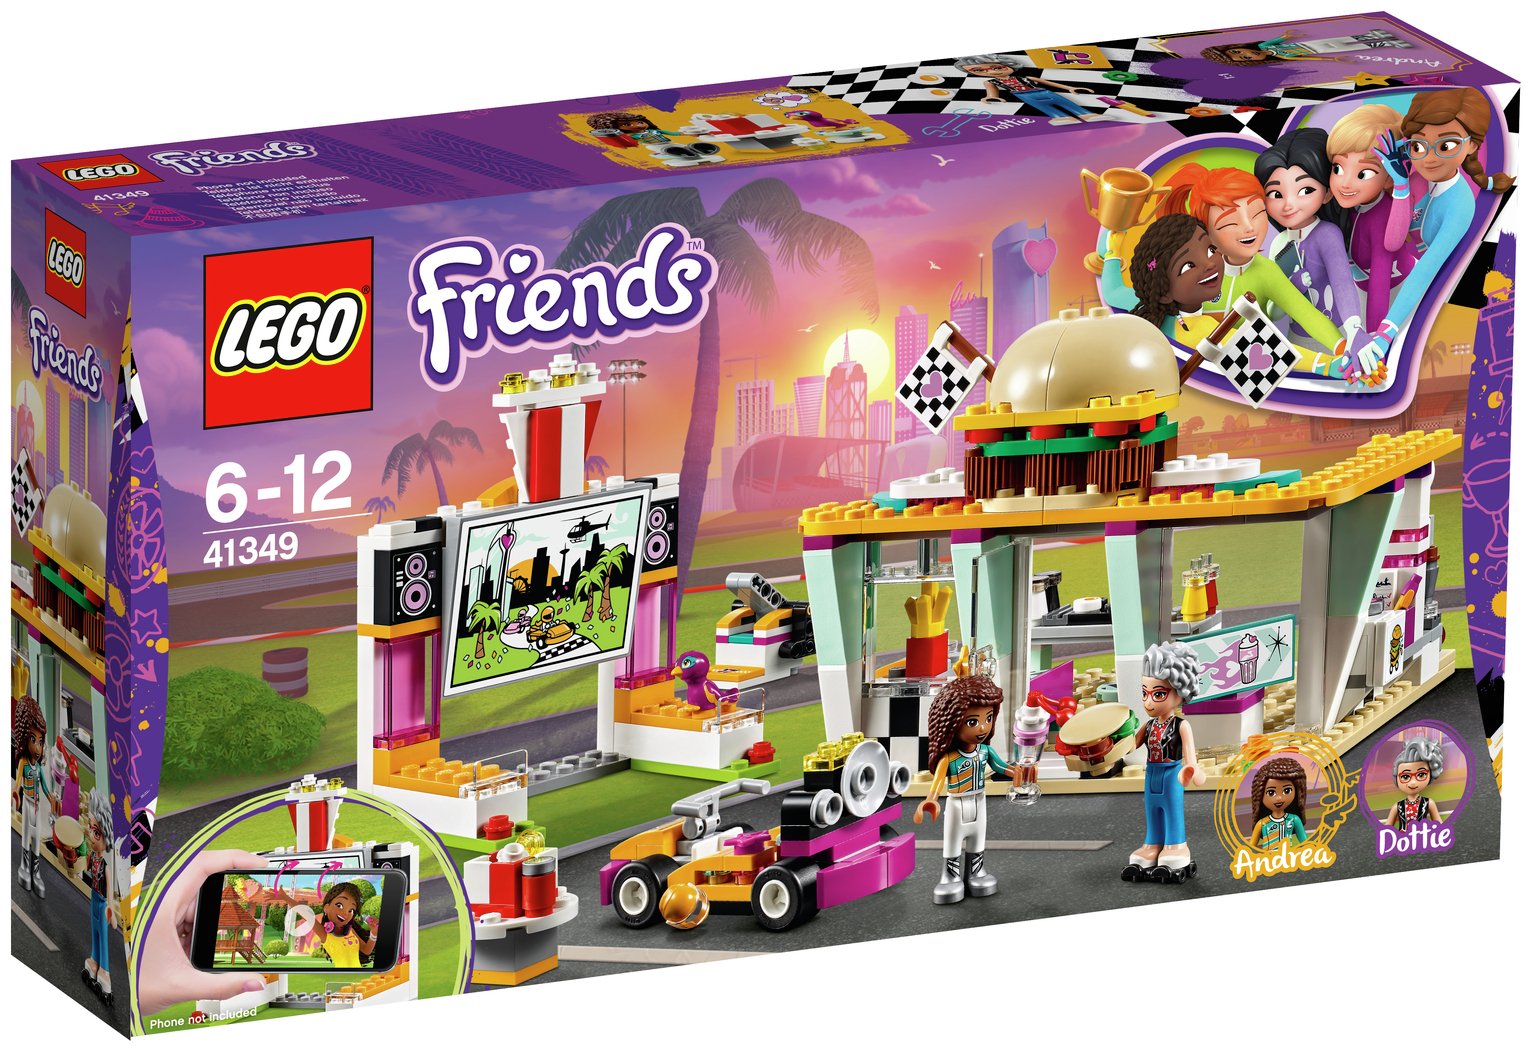 LEGO Friends Heartlake Drifting Retro Diner Playset - 41349